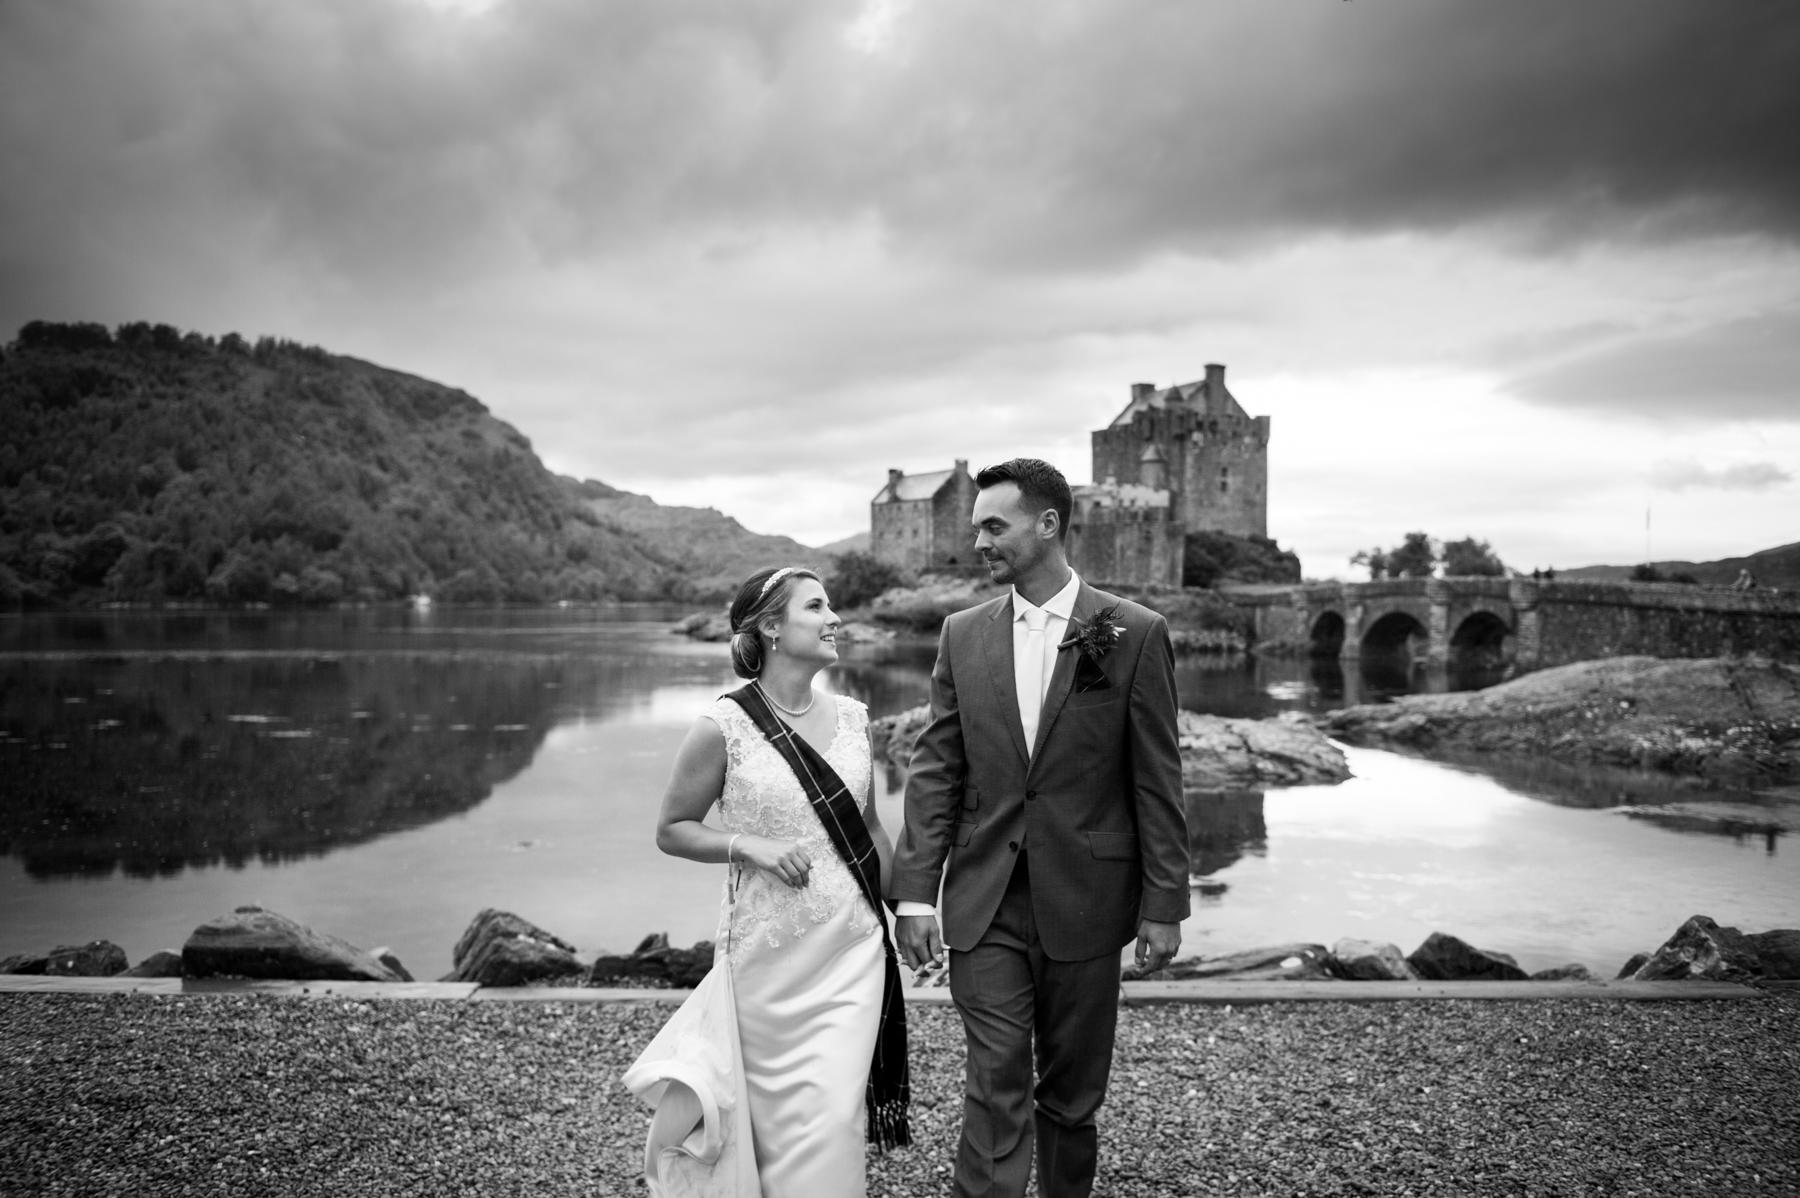 Nicole & TJ’s wedding at Eilean Donan Castle